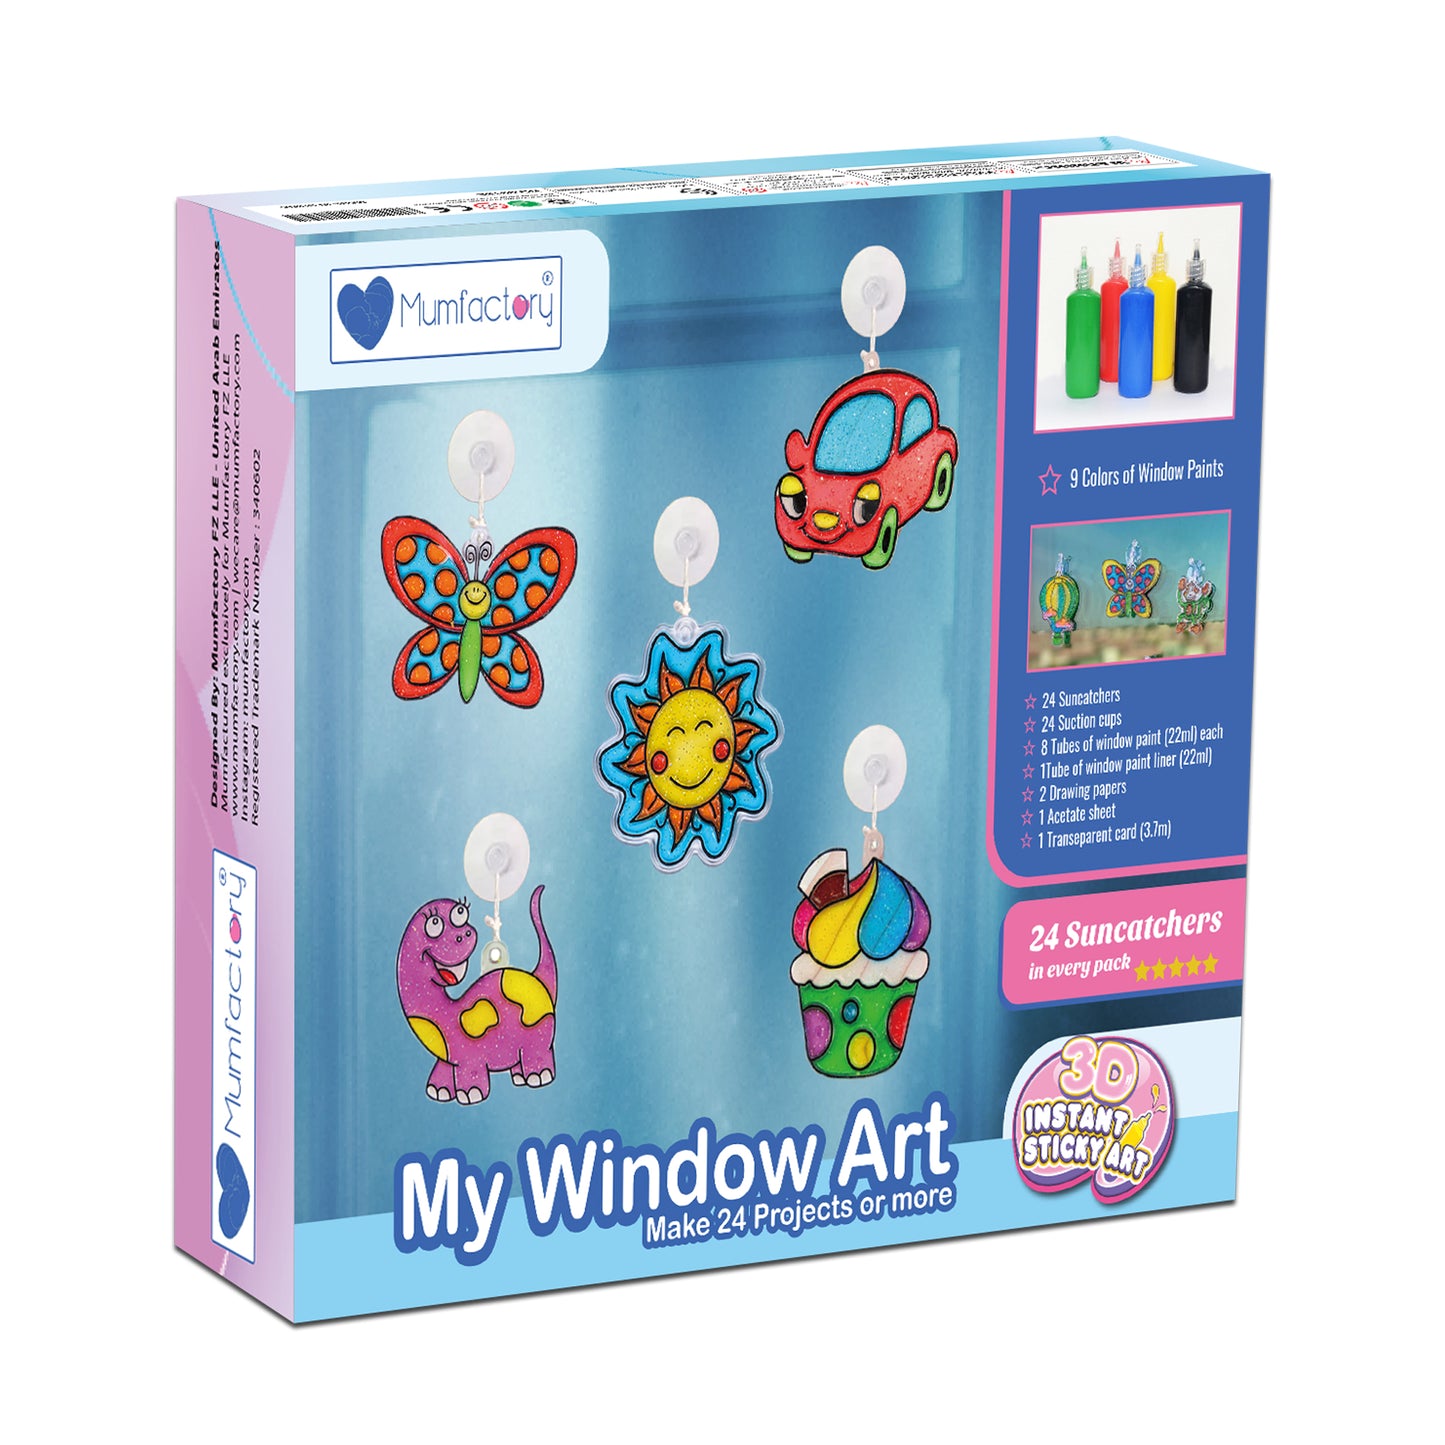 Window Art Paint Kit for Kids S0108